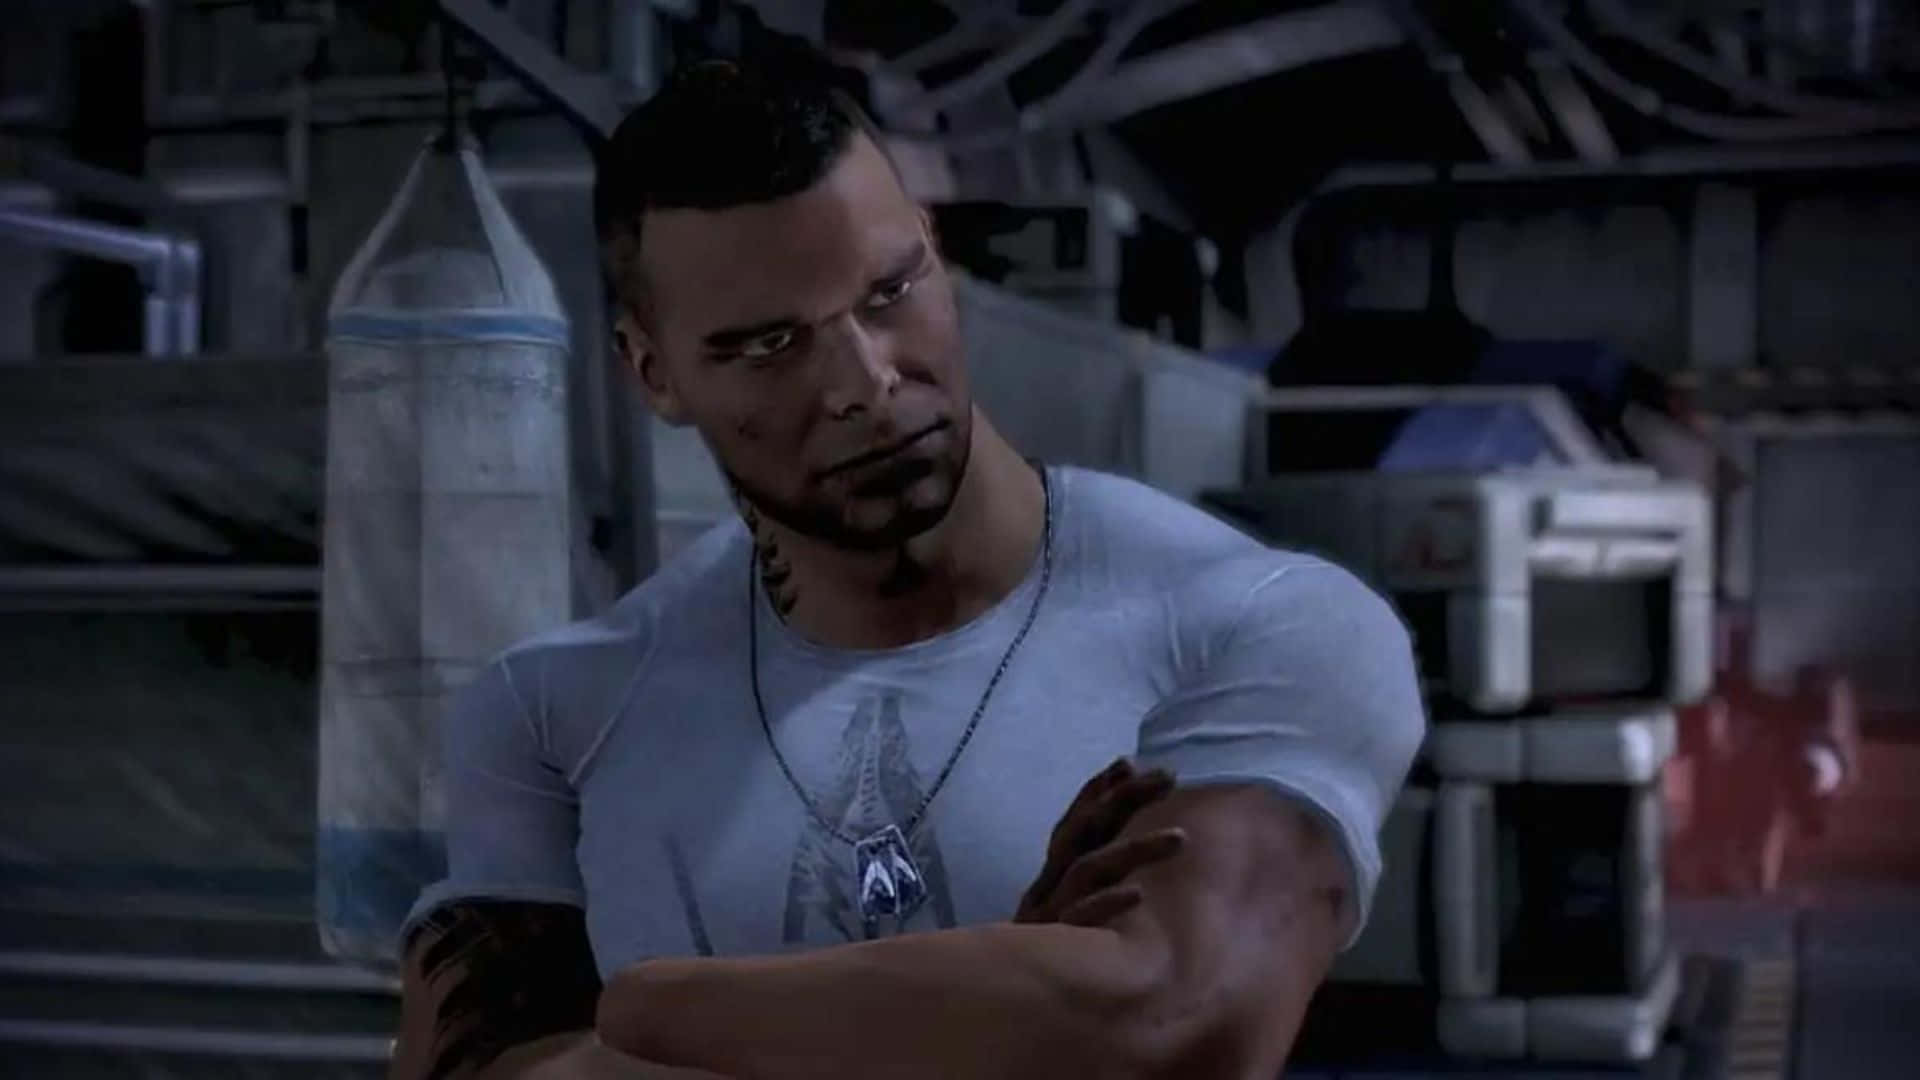 Jamesvega, El Poderoso Marine De La Alianza De Mass Effect, Erguido Frente Al Telón De Fondo De Un Planeta Alienígena. Fondo de pantalla